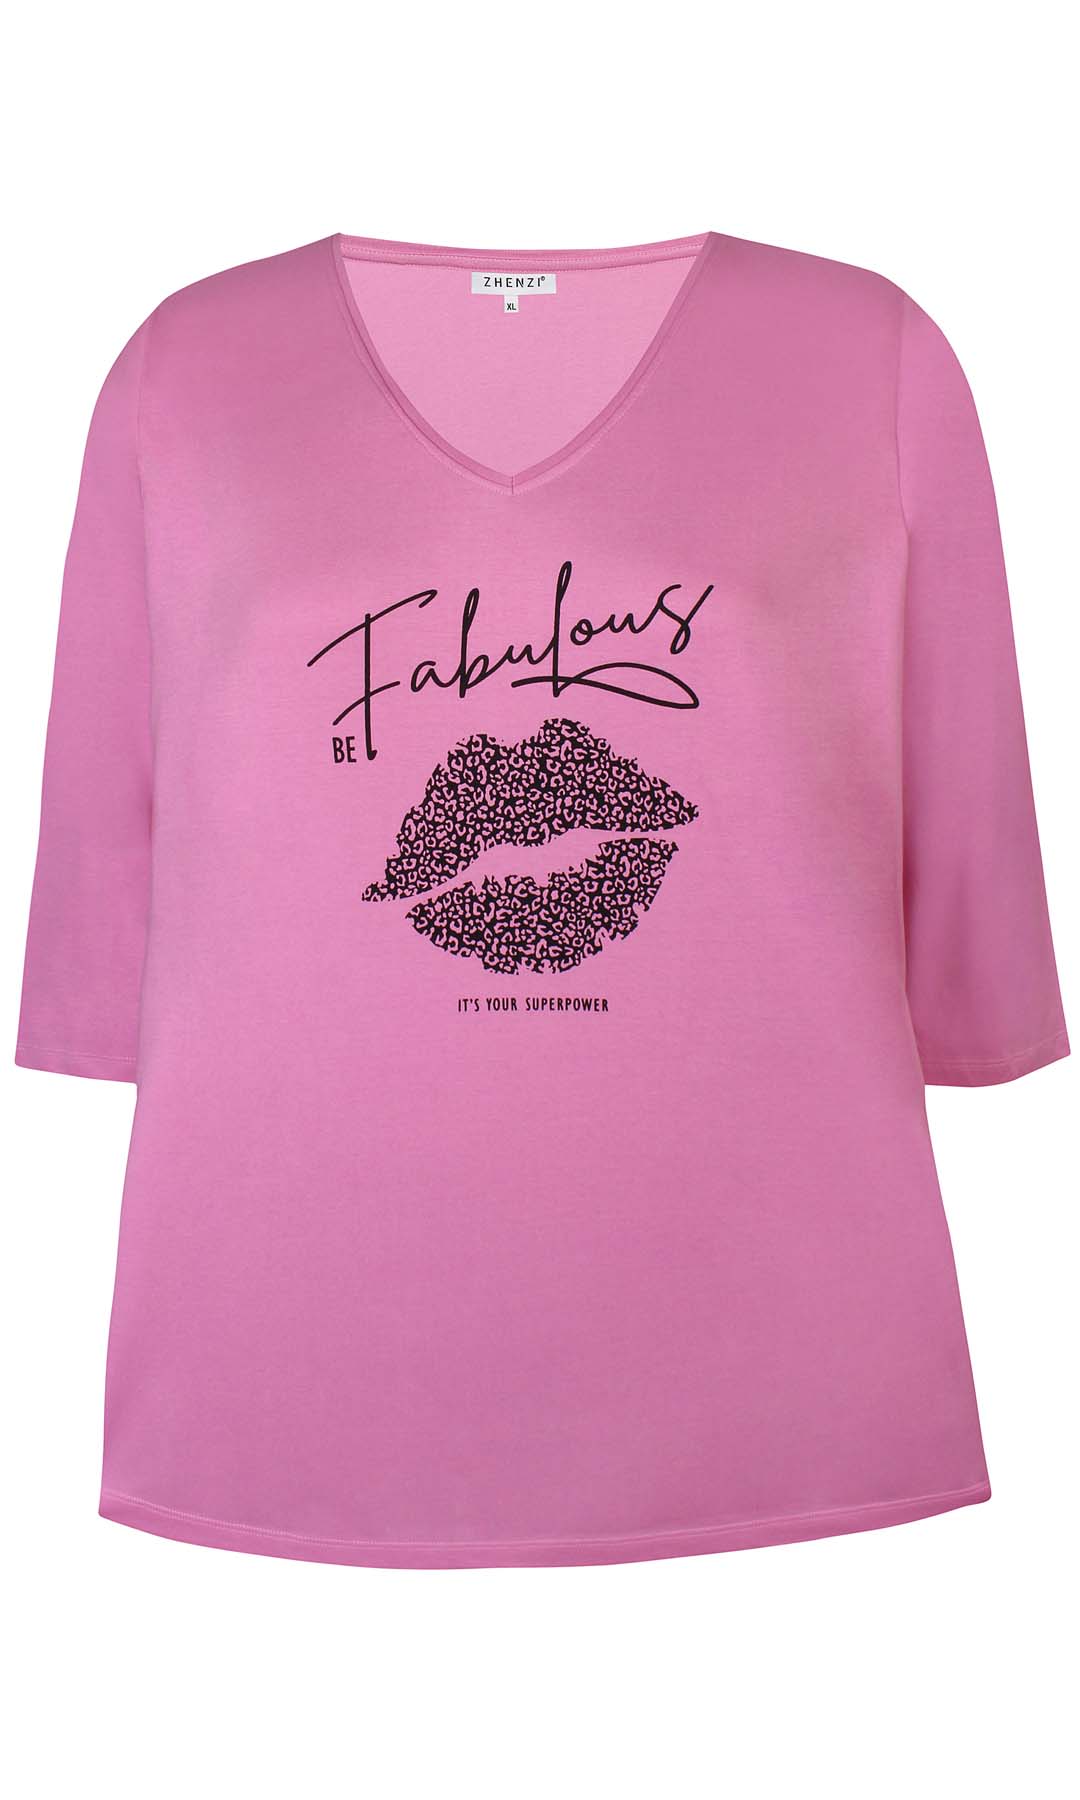 Chana 093 - T-shirt  - Pink